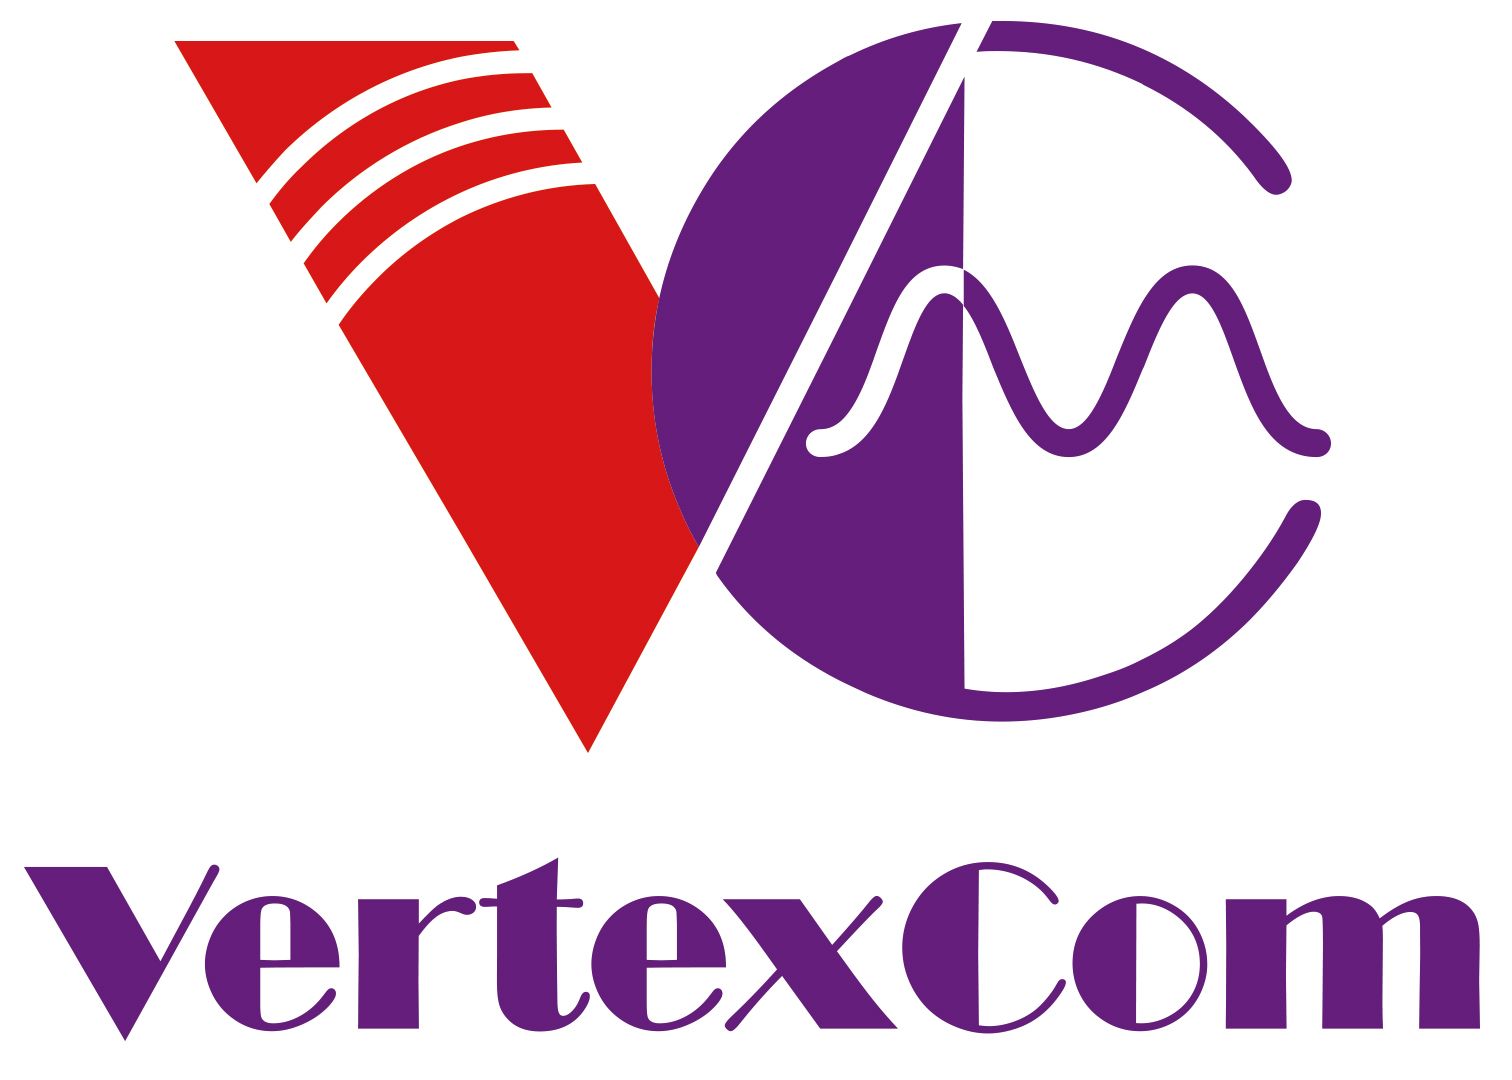 Vertexcom - Enlit Europe 2022